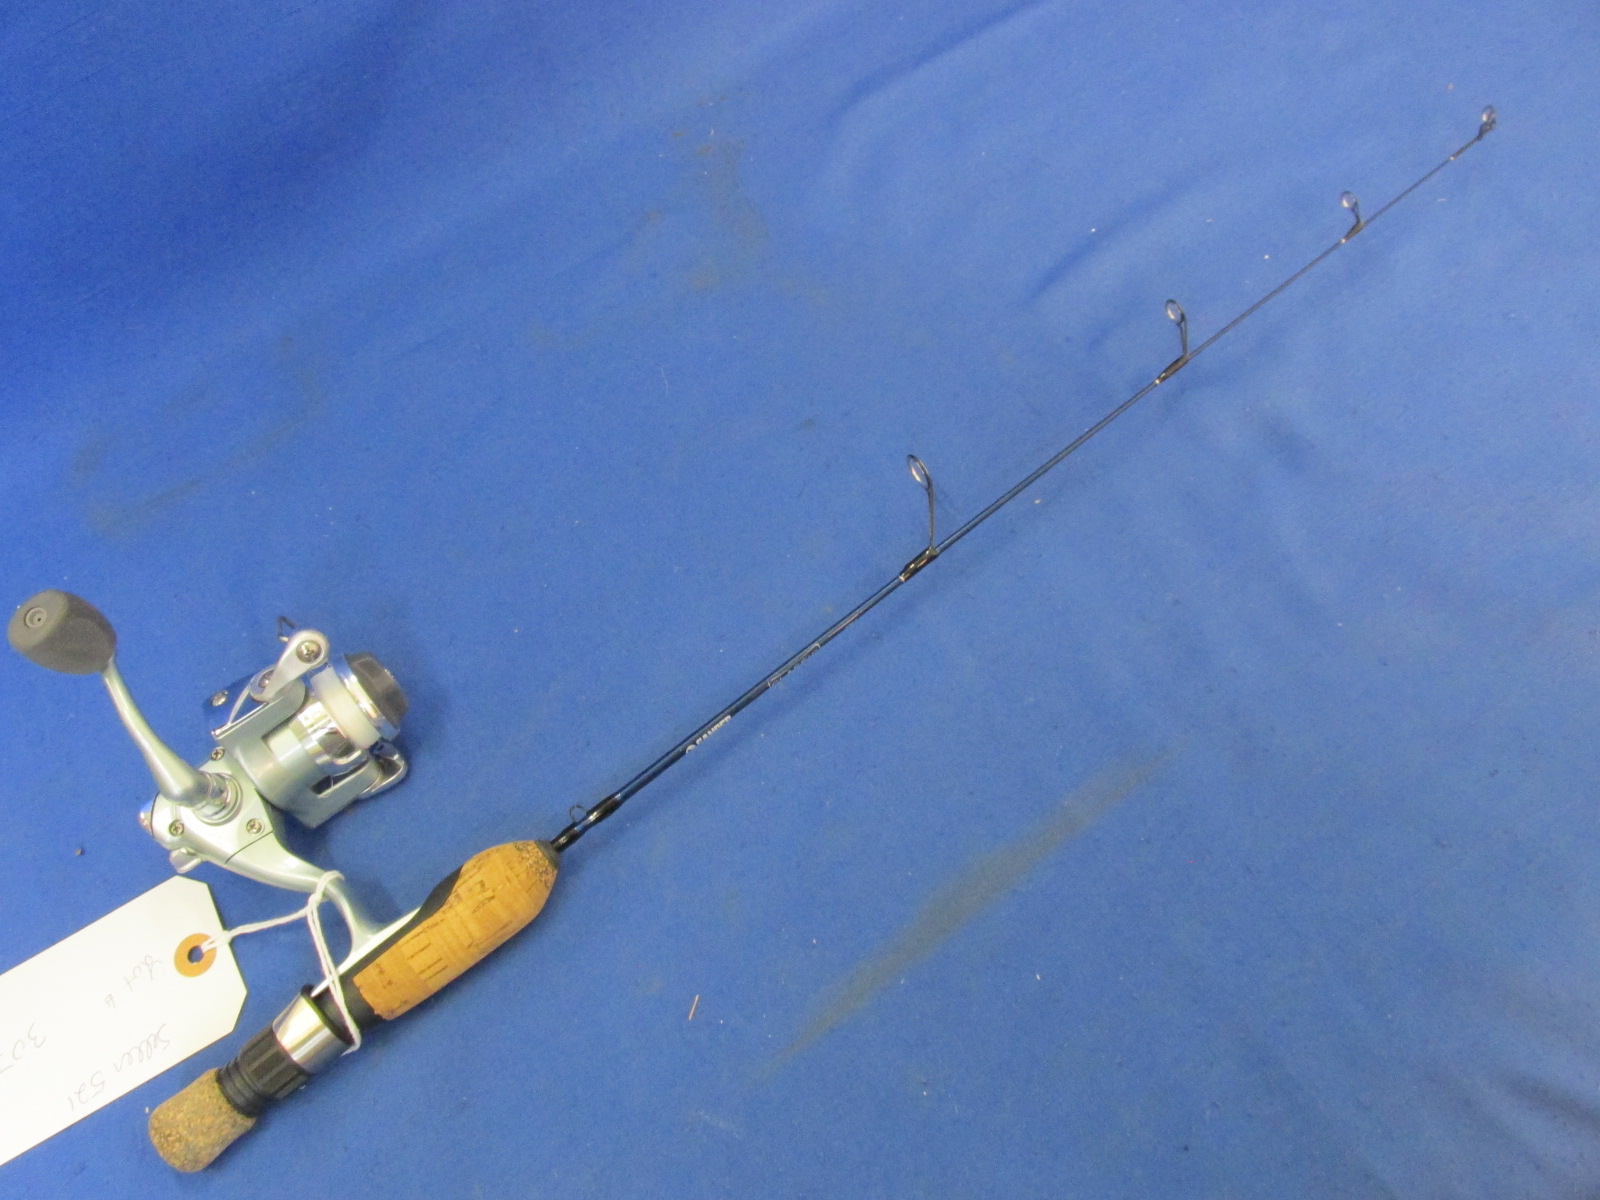 Gander Mountain Classic 23” UL Ice Fishing Rod